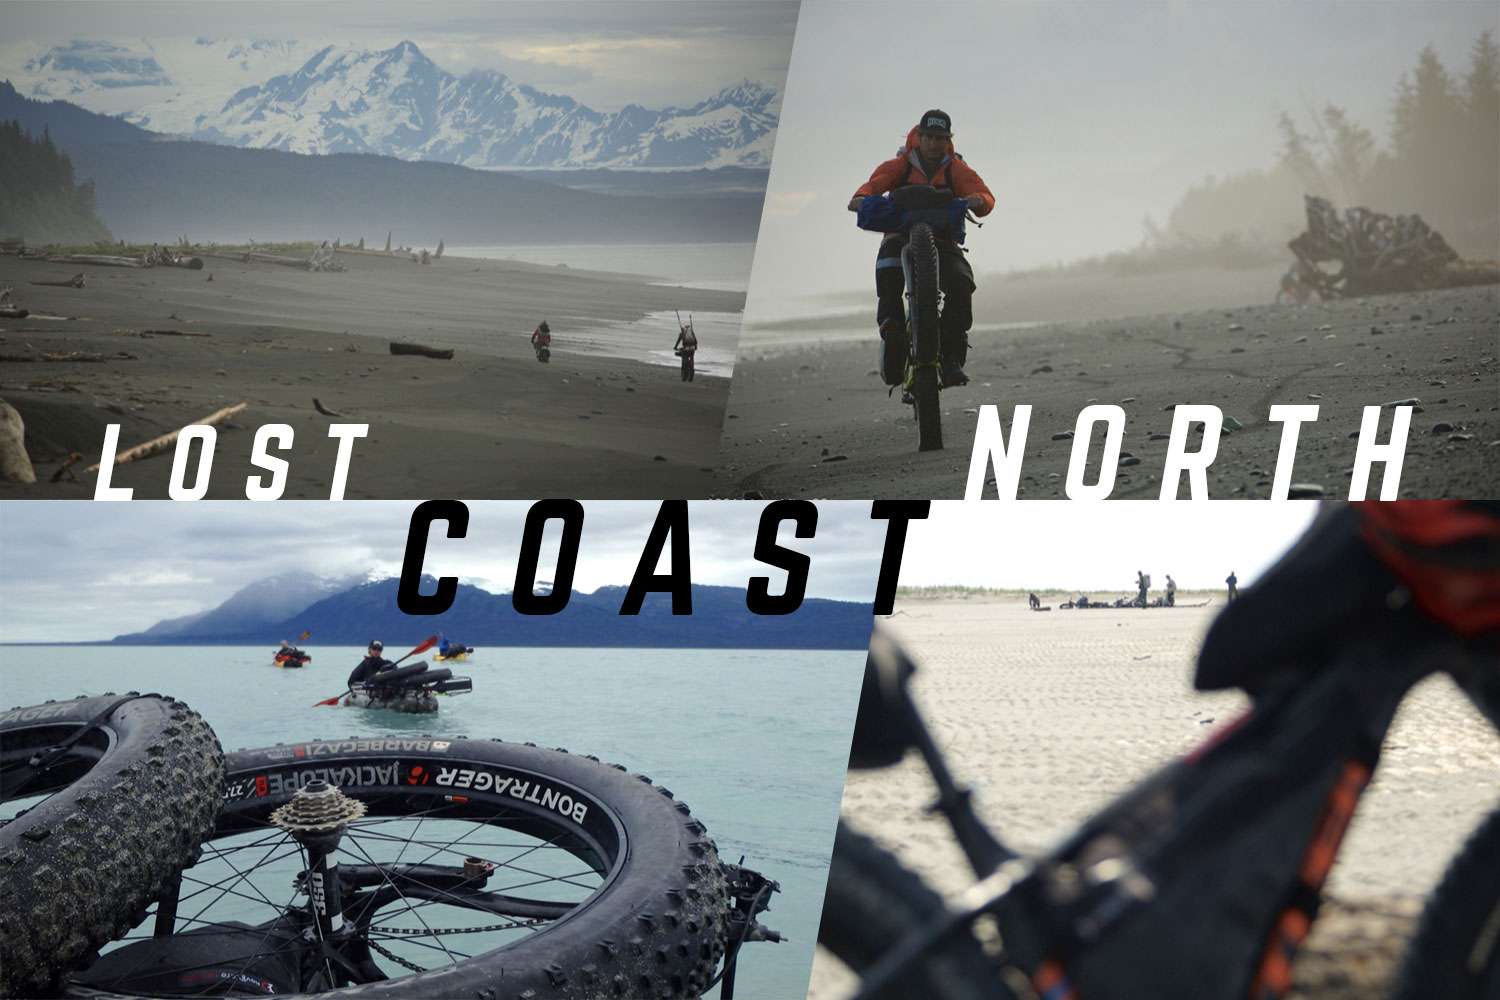 Lost Coast North, Bikepacking VIdeo, Alaska, Mike Curiak